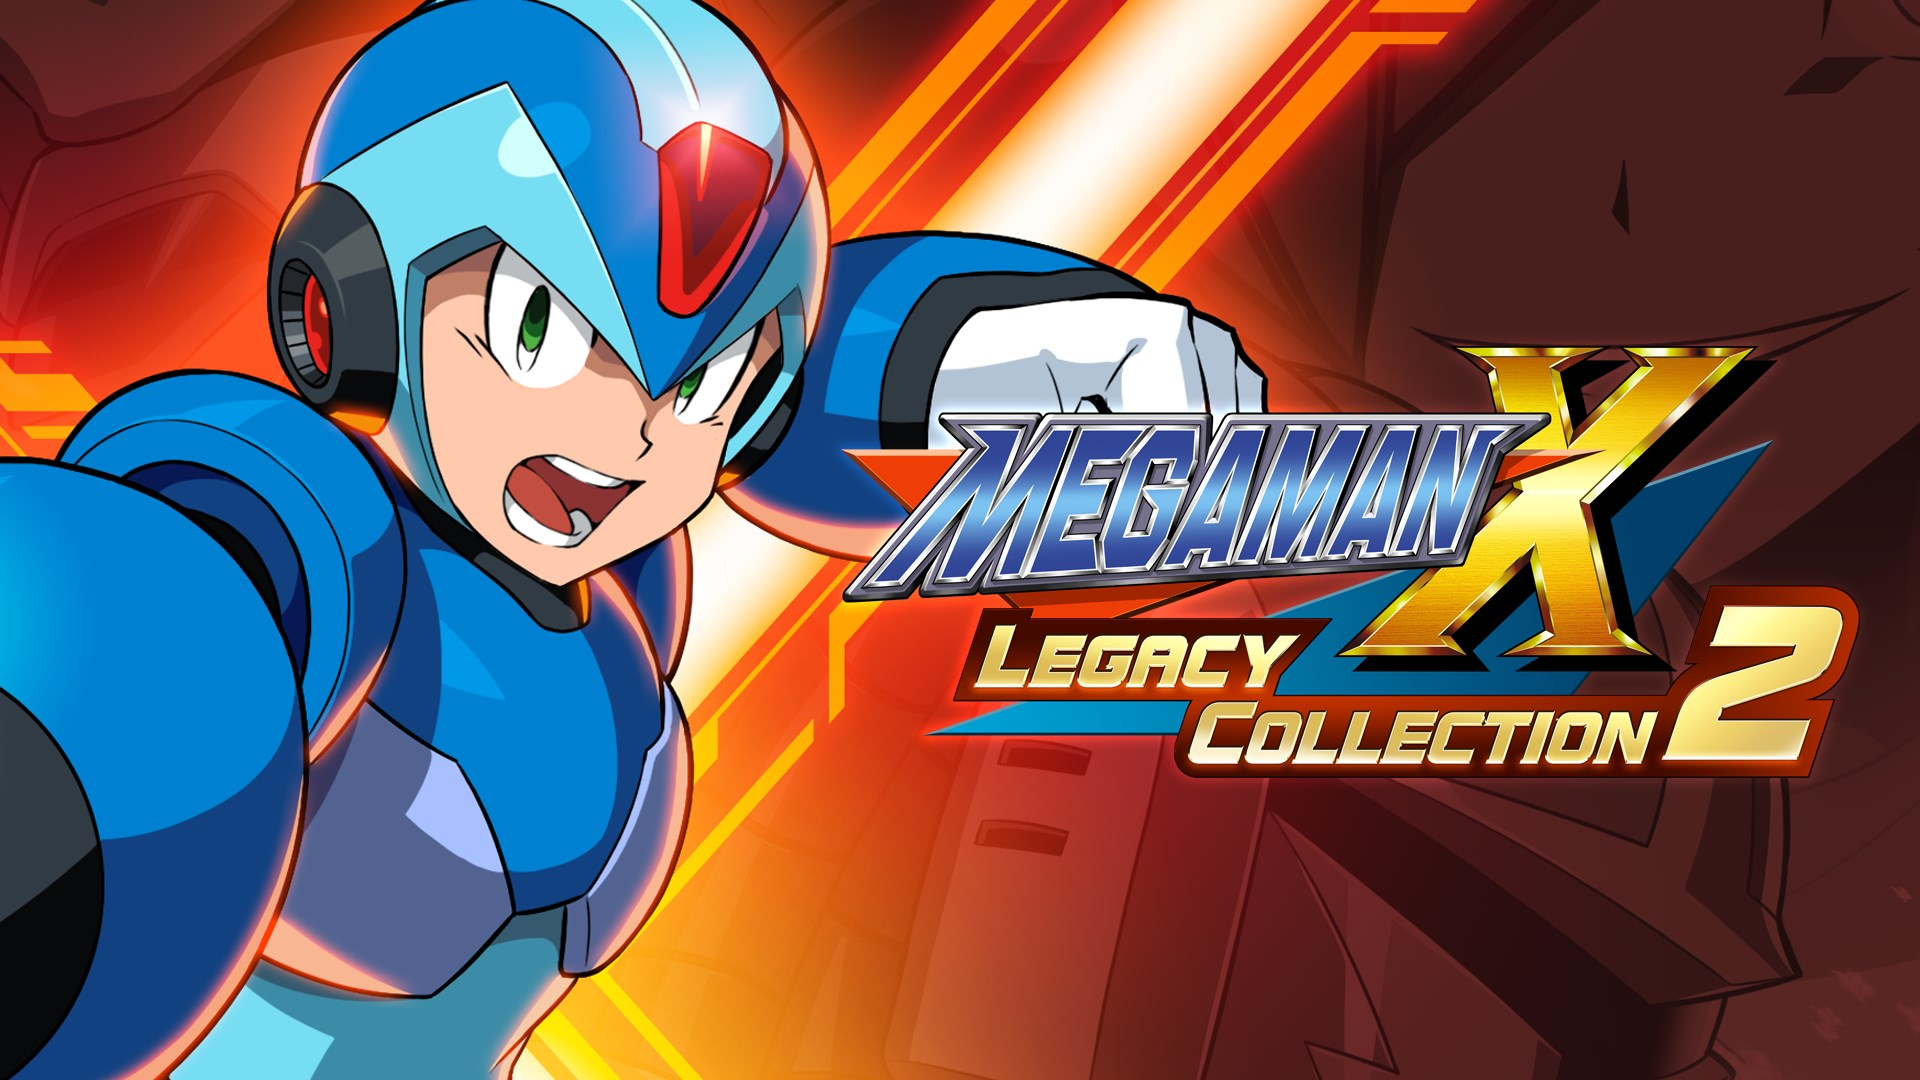 Mega man legacy collection. Mega man x Legacy collection Wallpapers. Mega man x Legacy collection 1 Wallpapers.